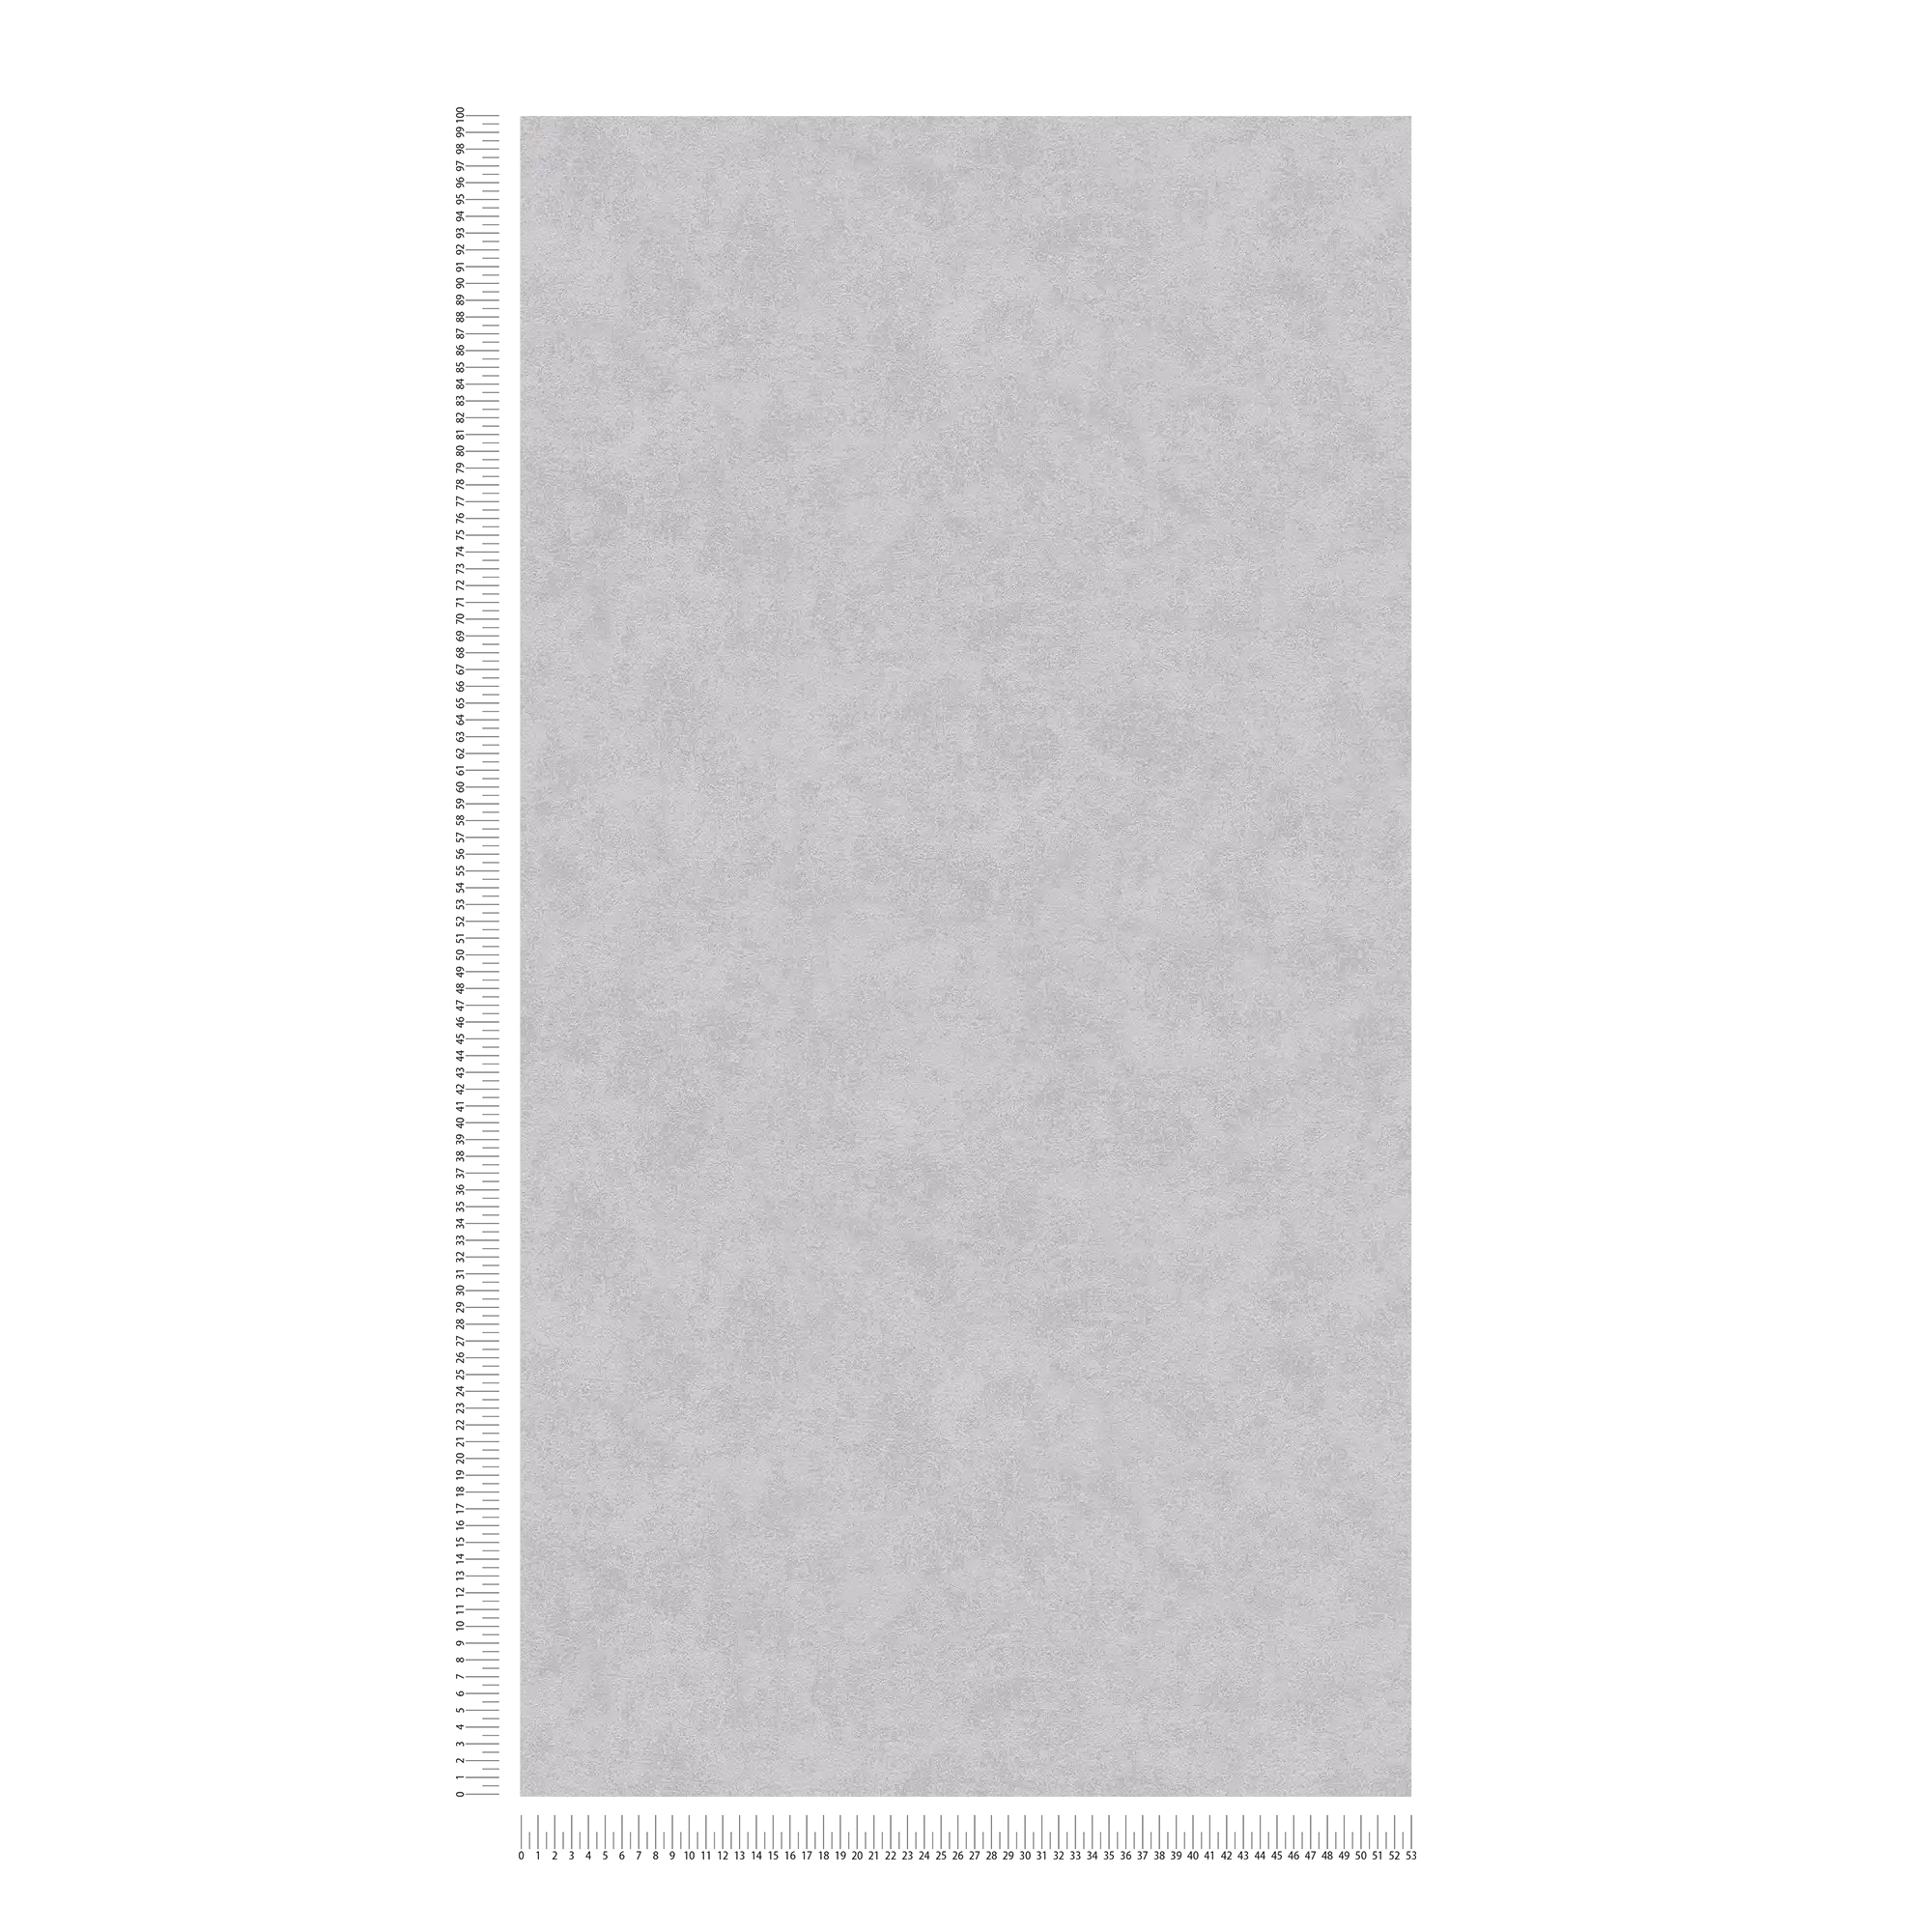             Vliestapete Beton-Grau matt mit Strukturprägung
        